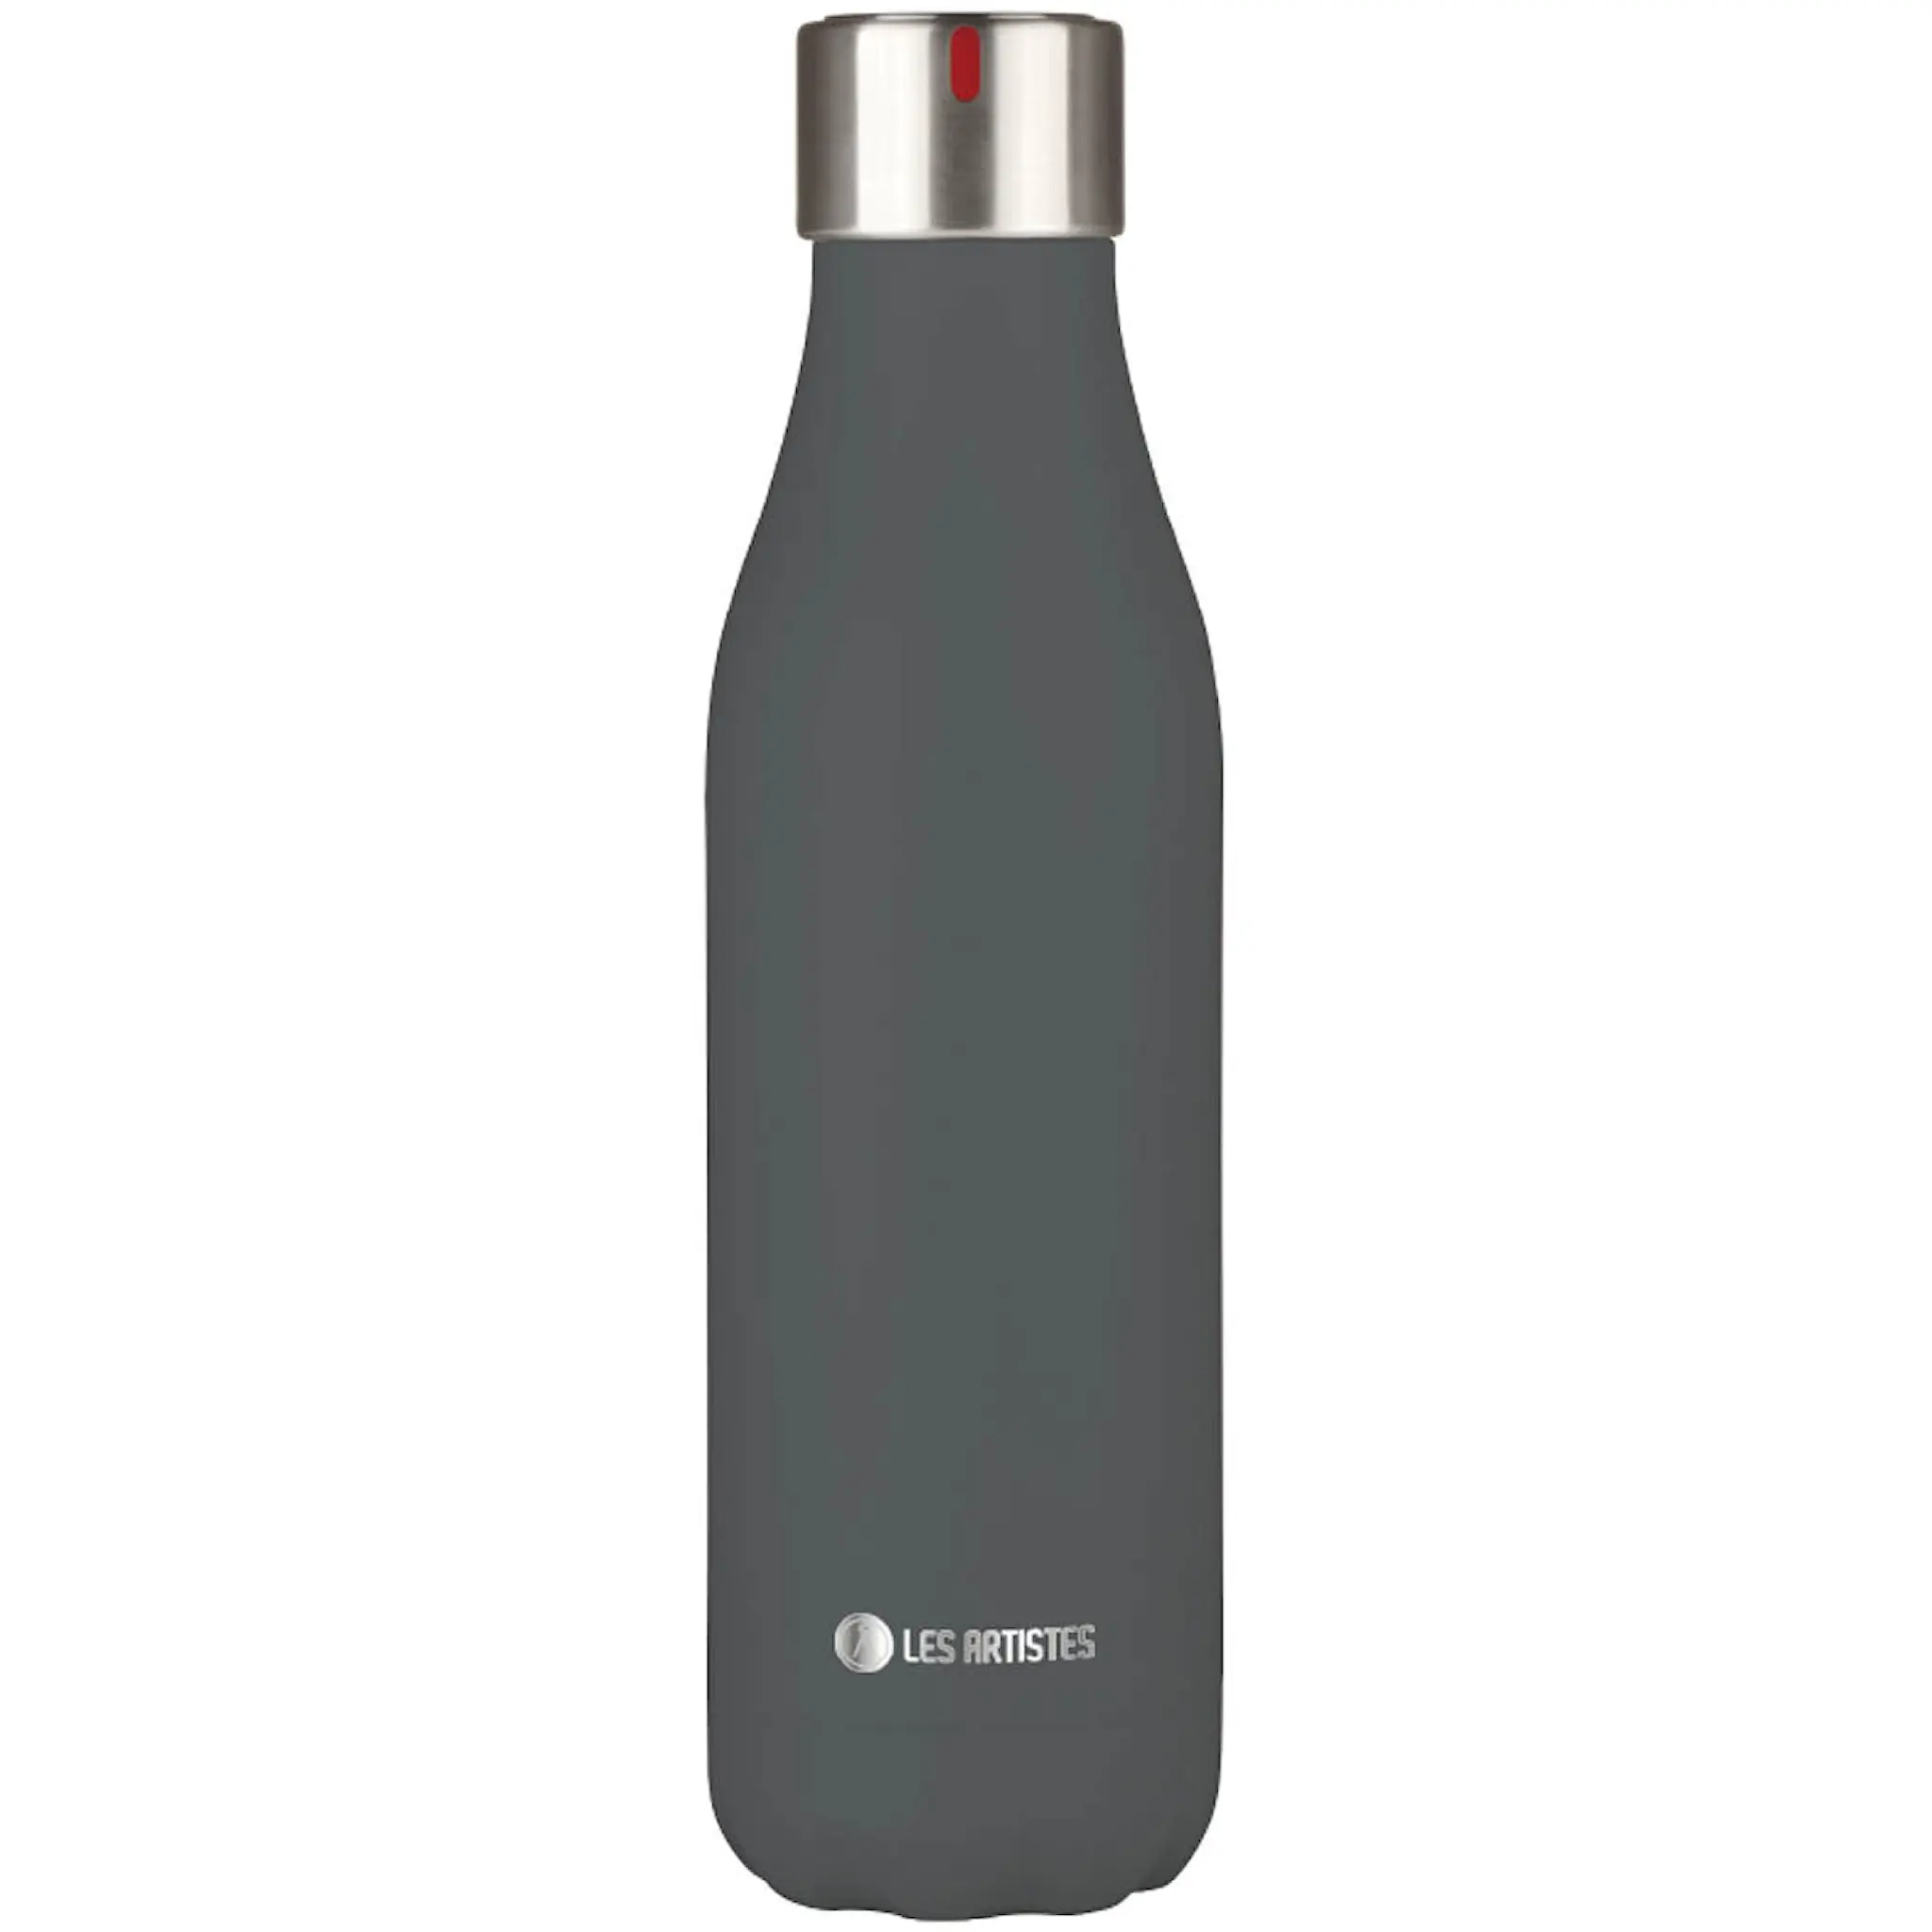 Les Artistes Bottle Up termoflaske 0,5L mørk grå